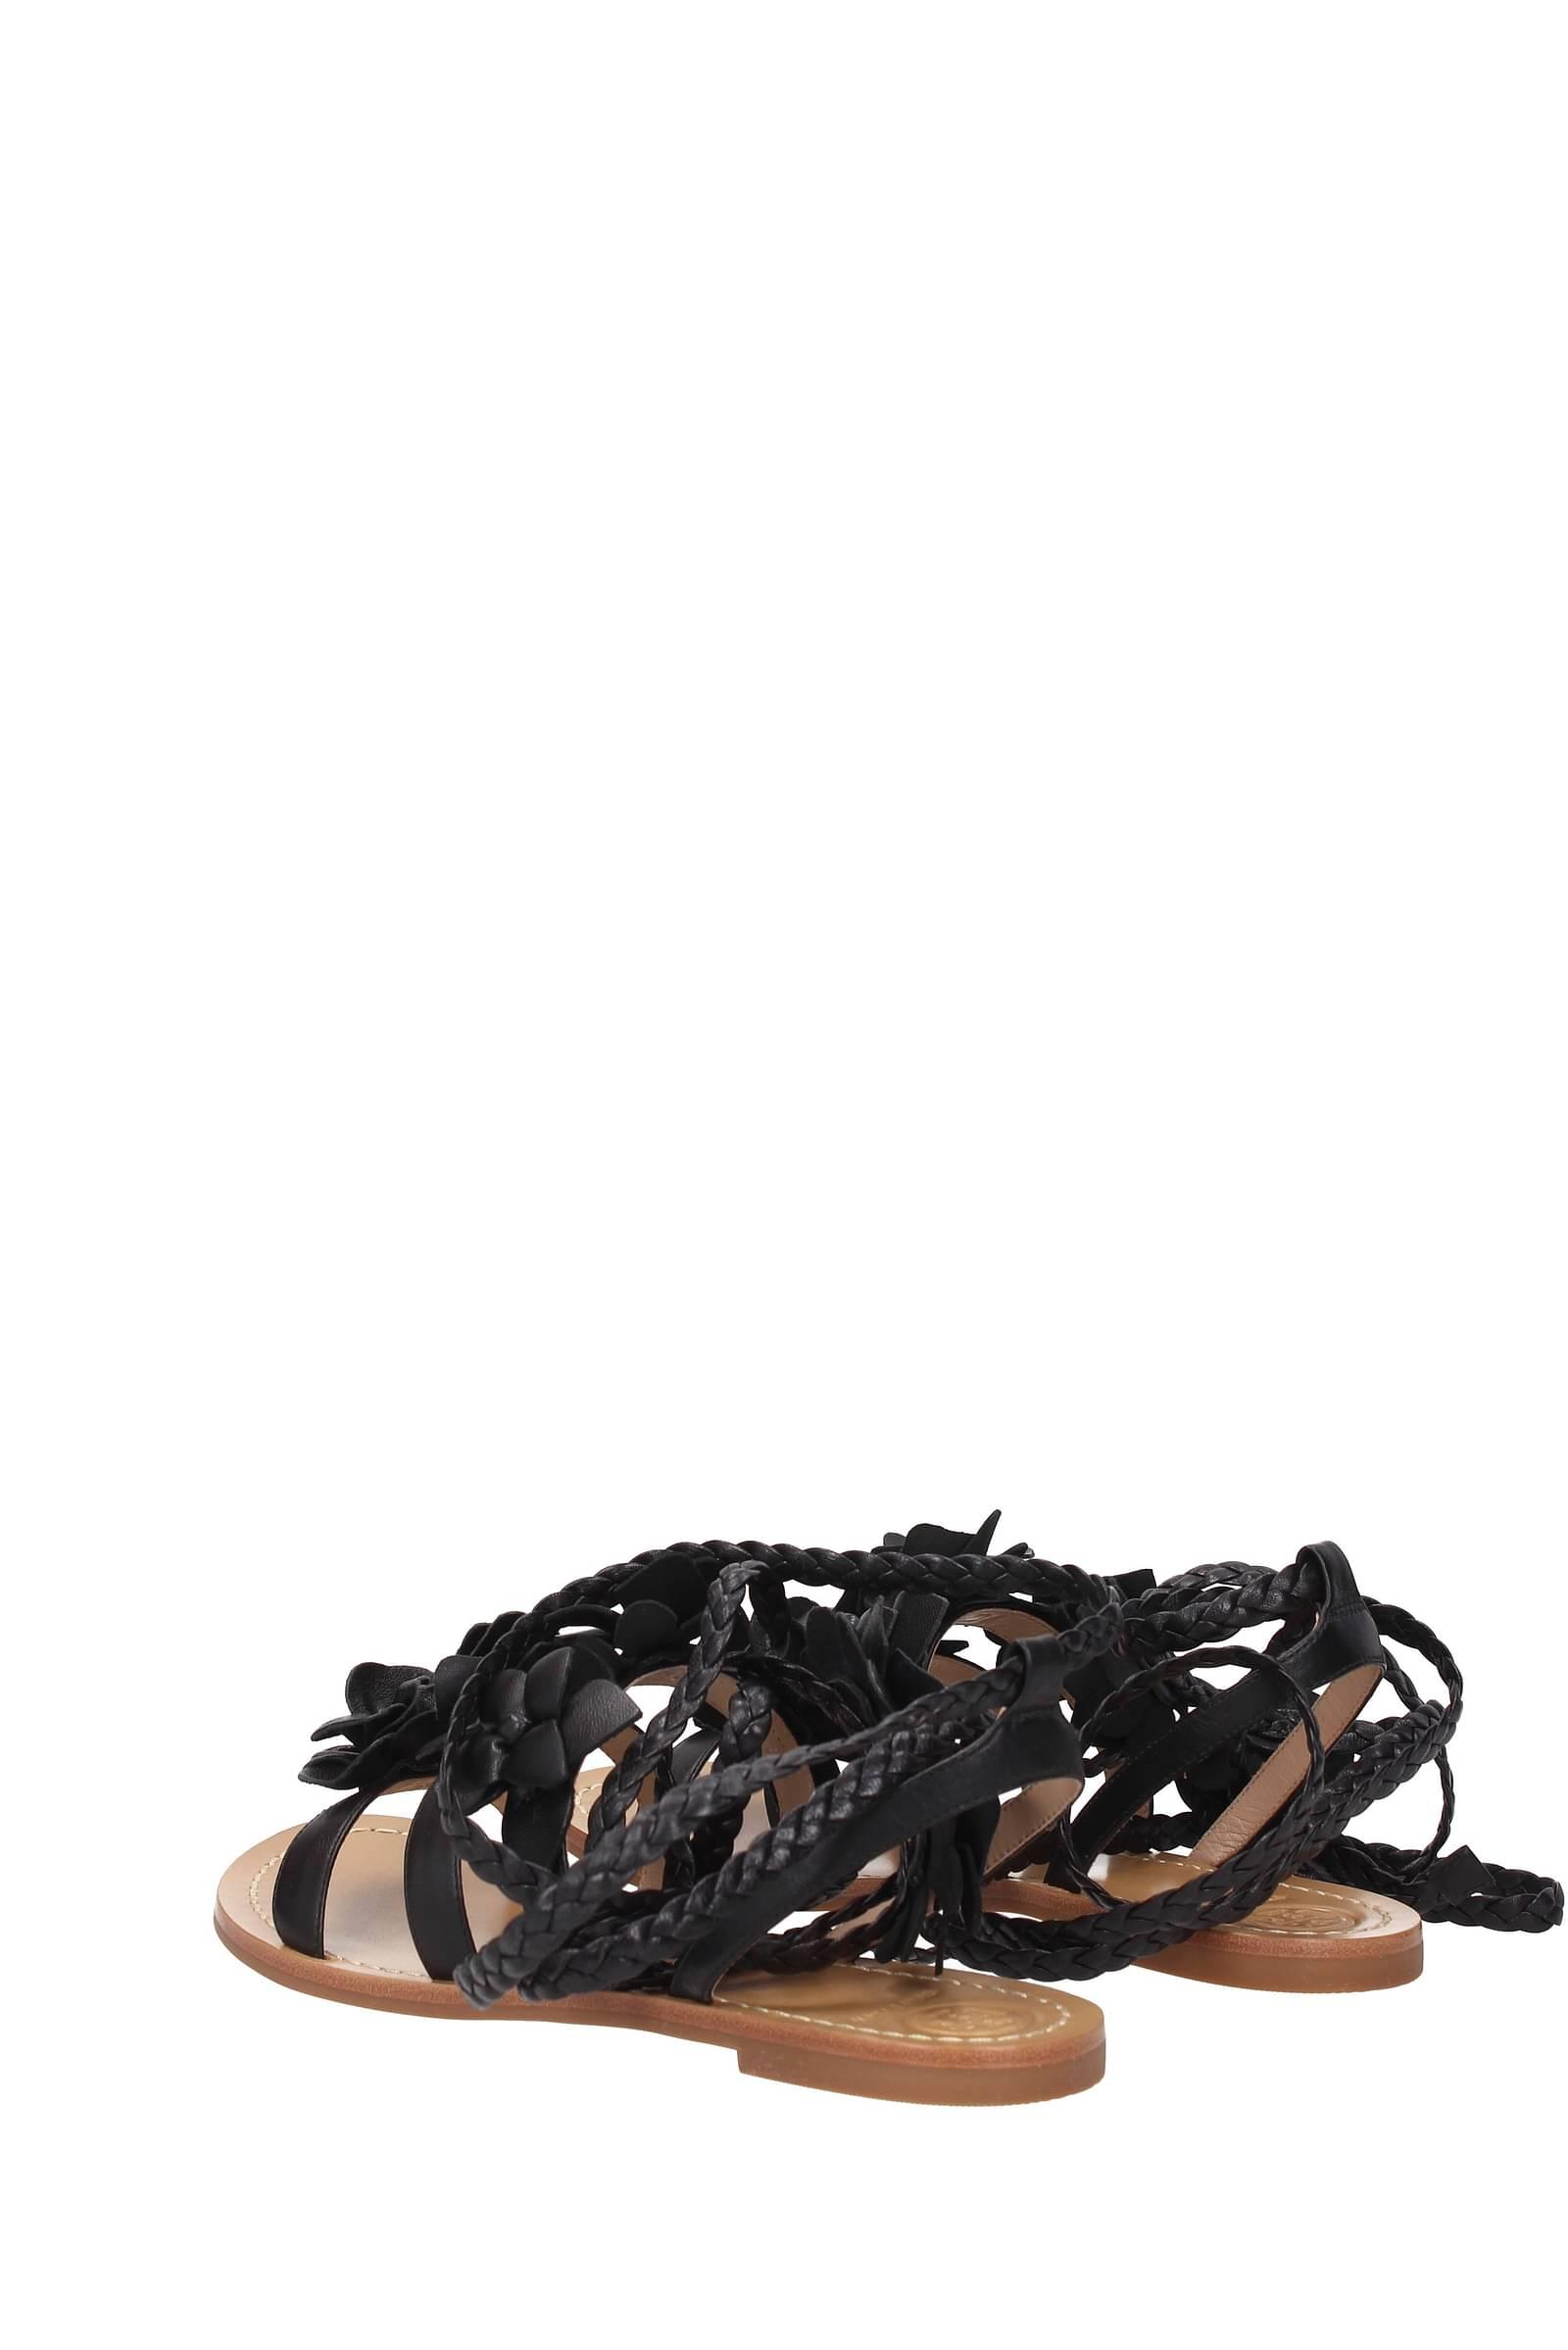 Tory Burch Sandals Blossom Gladiator Leather Black | Lyst